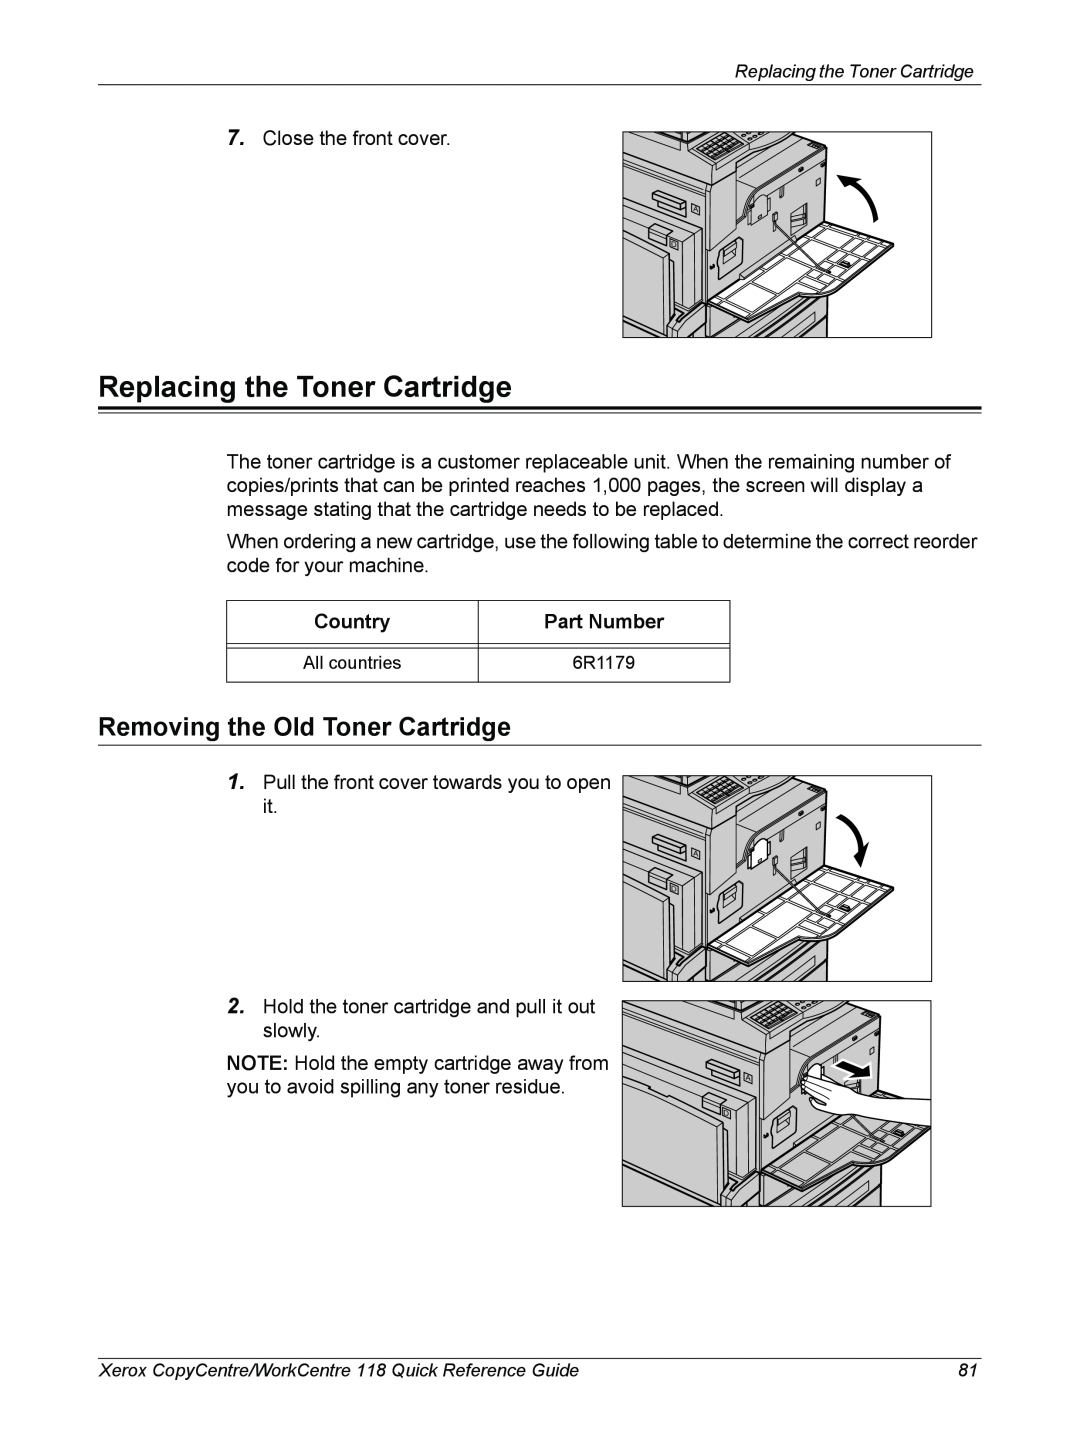 Xerox C118, M118i manual Replacing the Toner Cartridge, Removing the Old Toner Cartridge, Country, Part Number 